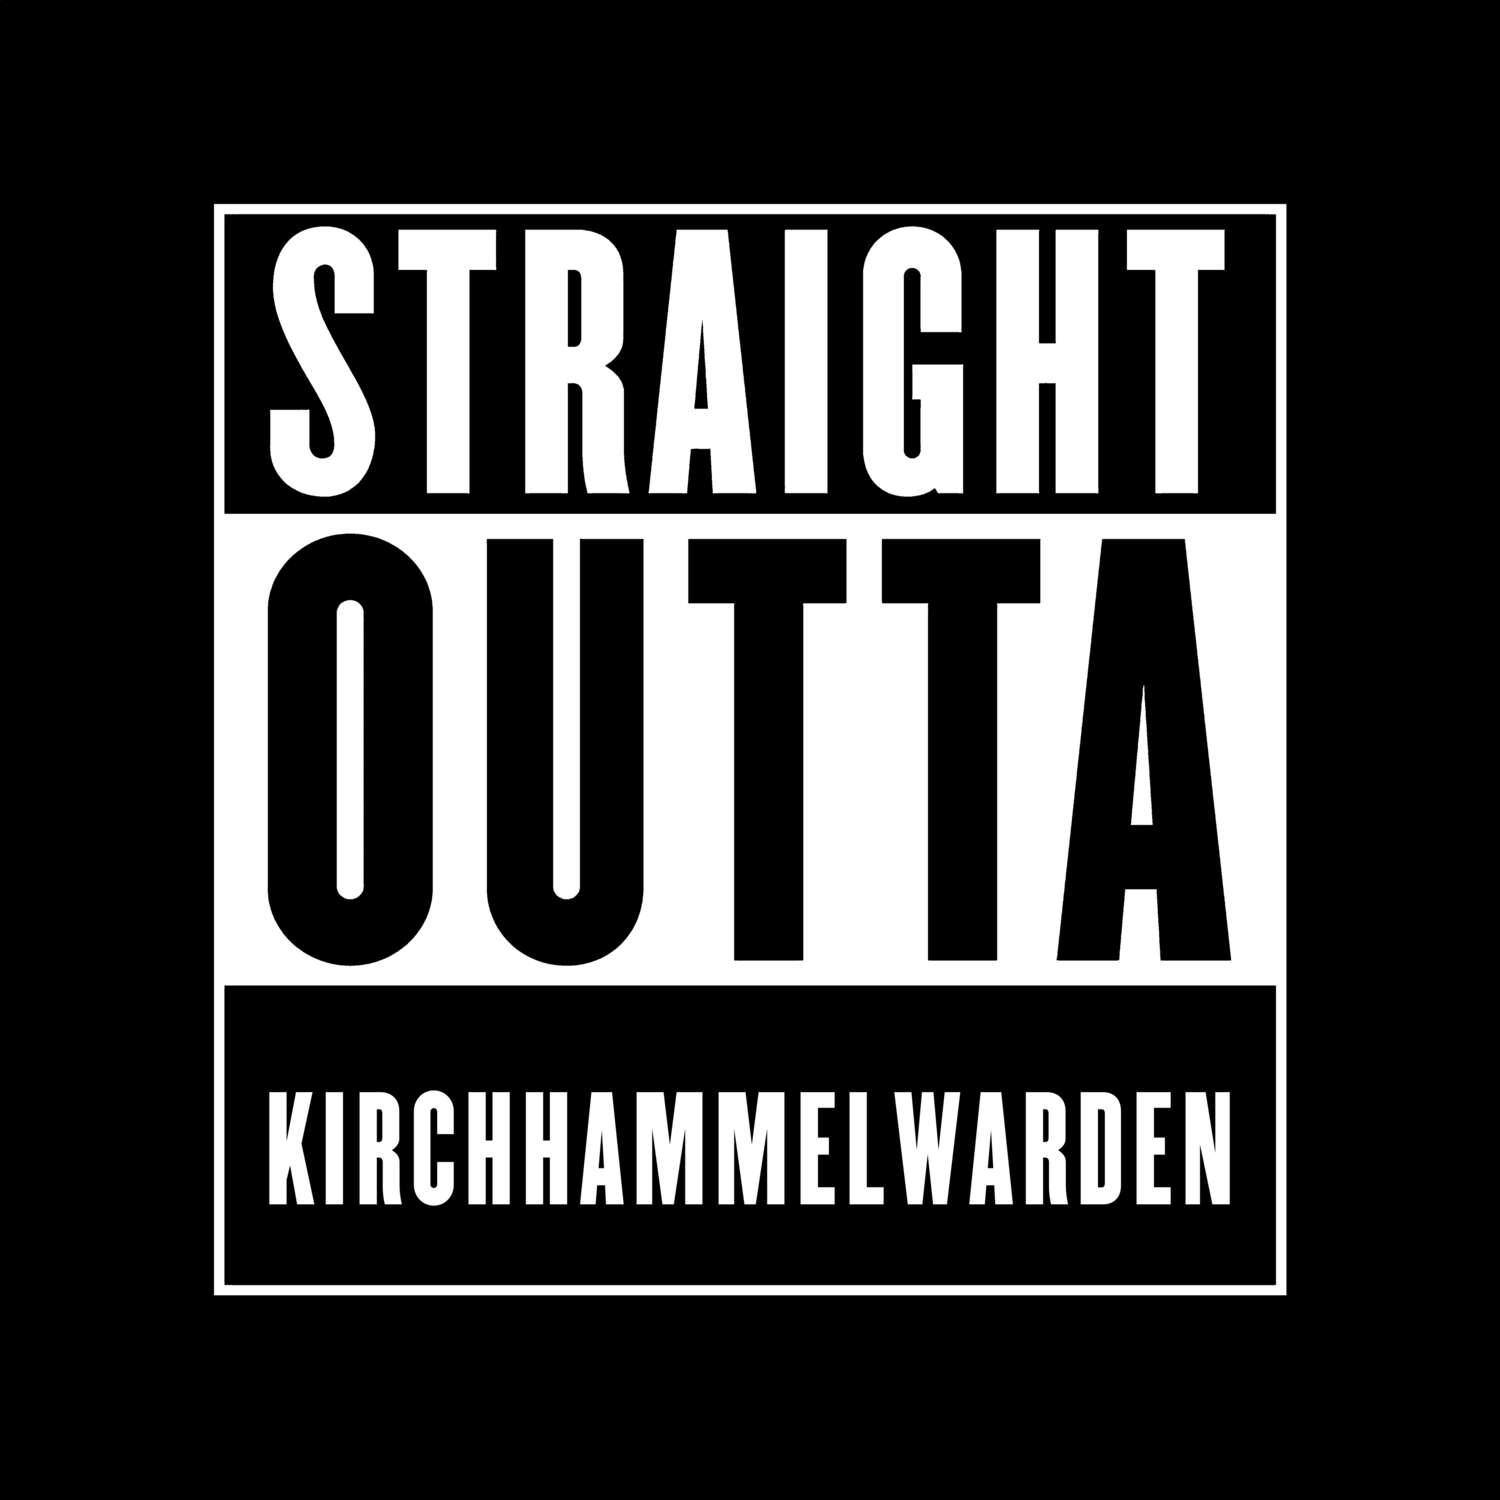 Kirchhammelwarden T-Shirt »Straight Outta«